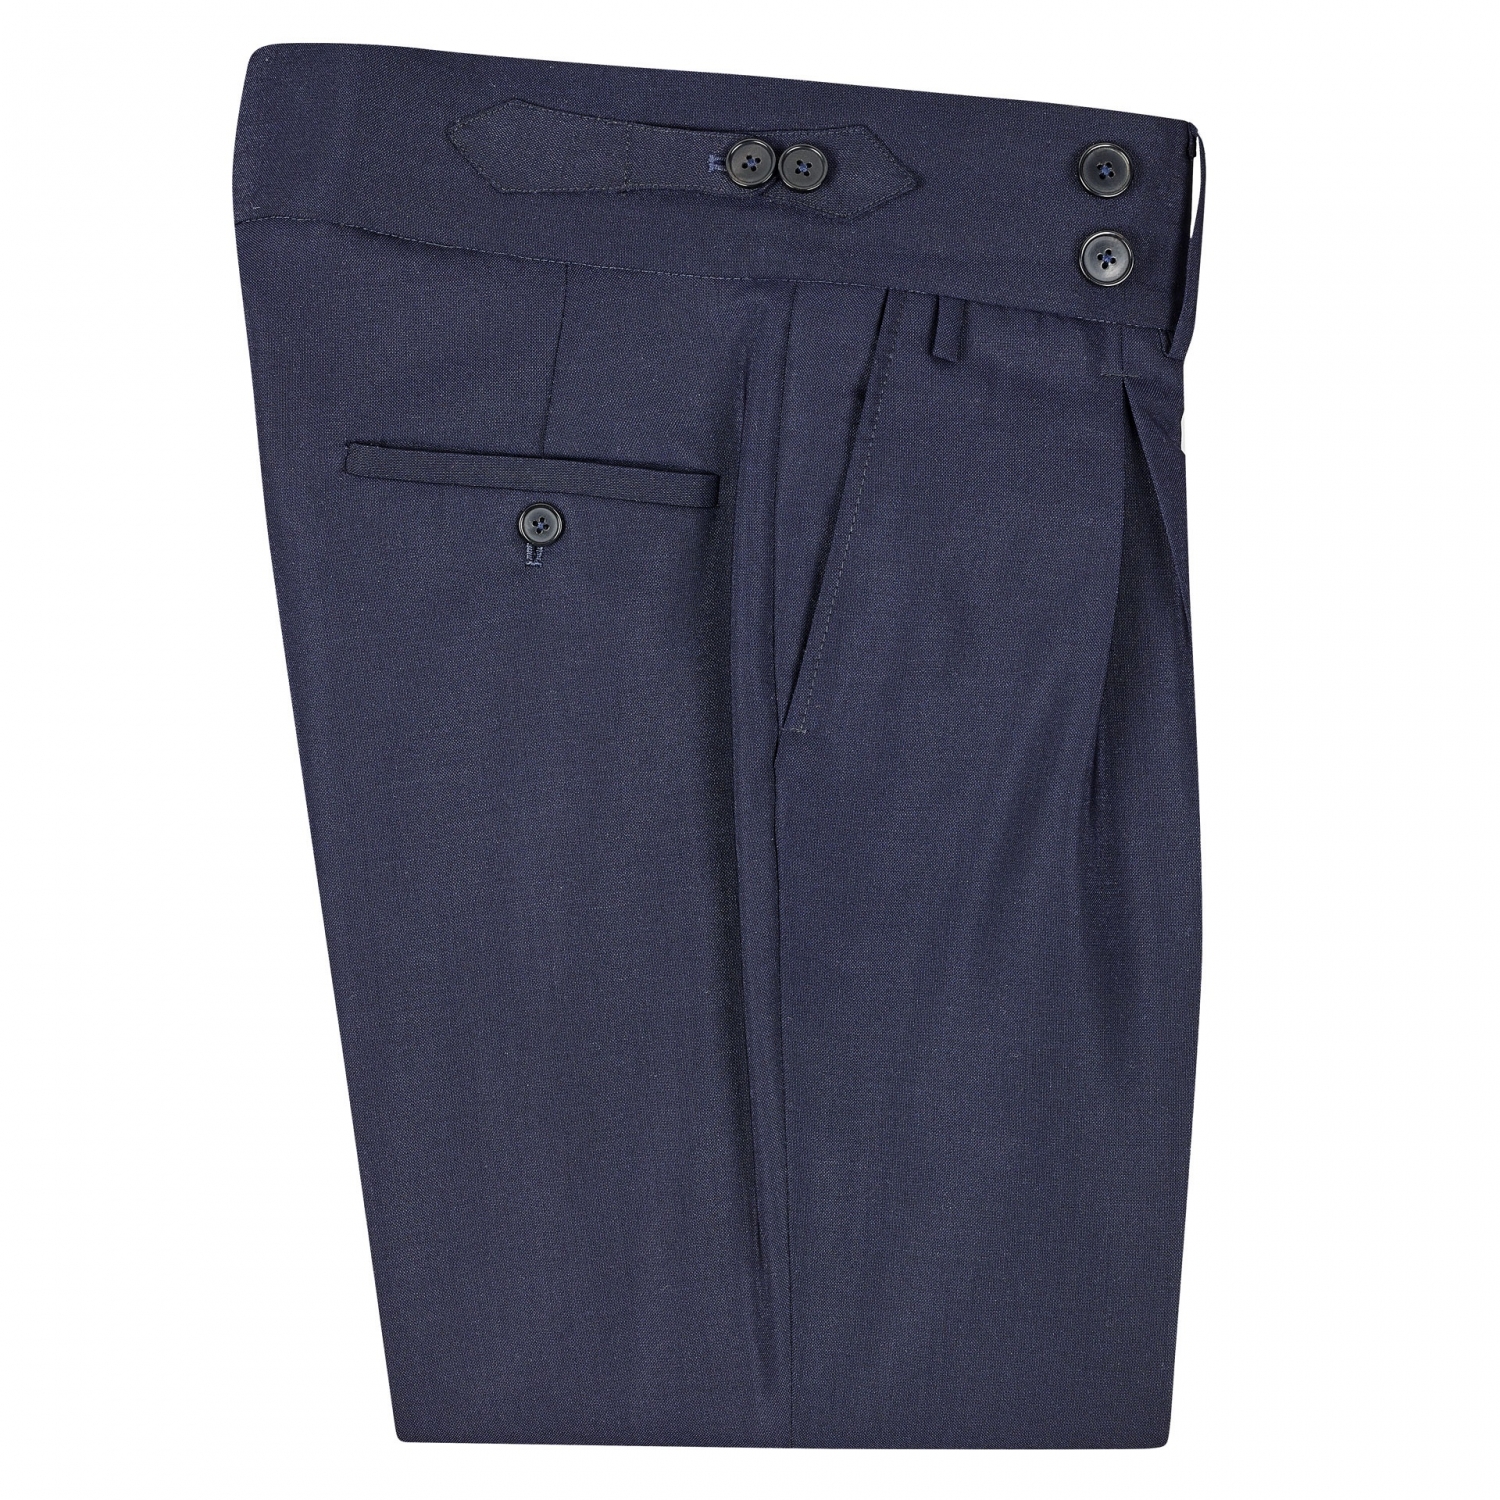 SSM9 - Pantalon bleu marine taille haute - 56% Mohair Karoo 44% laine léger 290g/m² Loro Piana